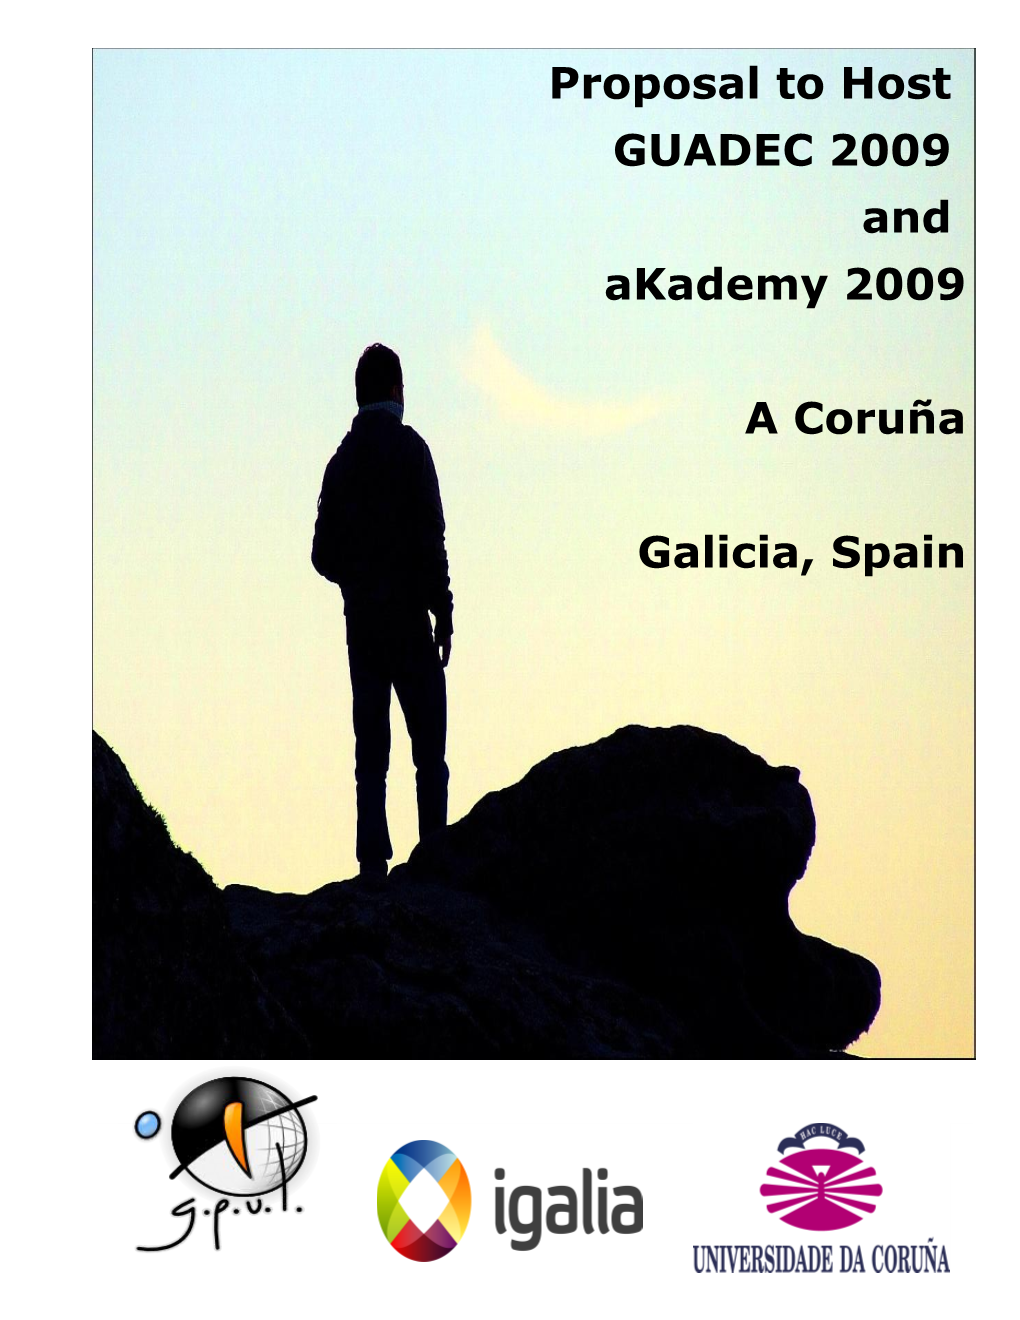 Proposal to Host GUADEC 2009 and Akademy 2009 a Coruña